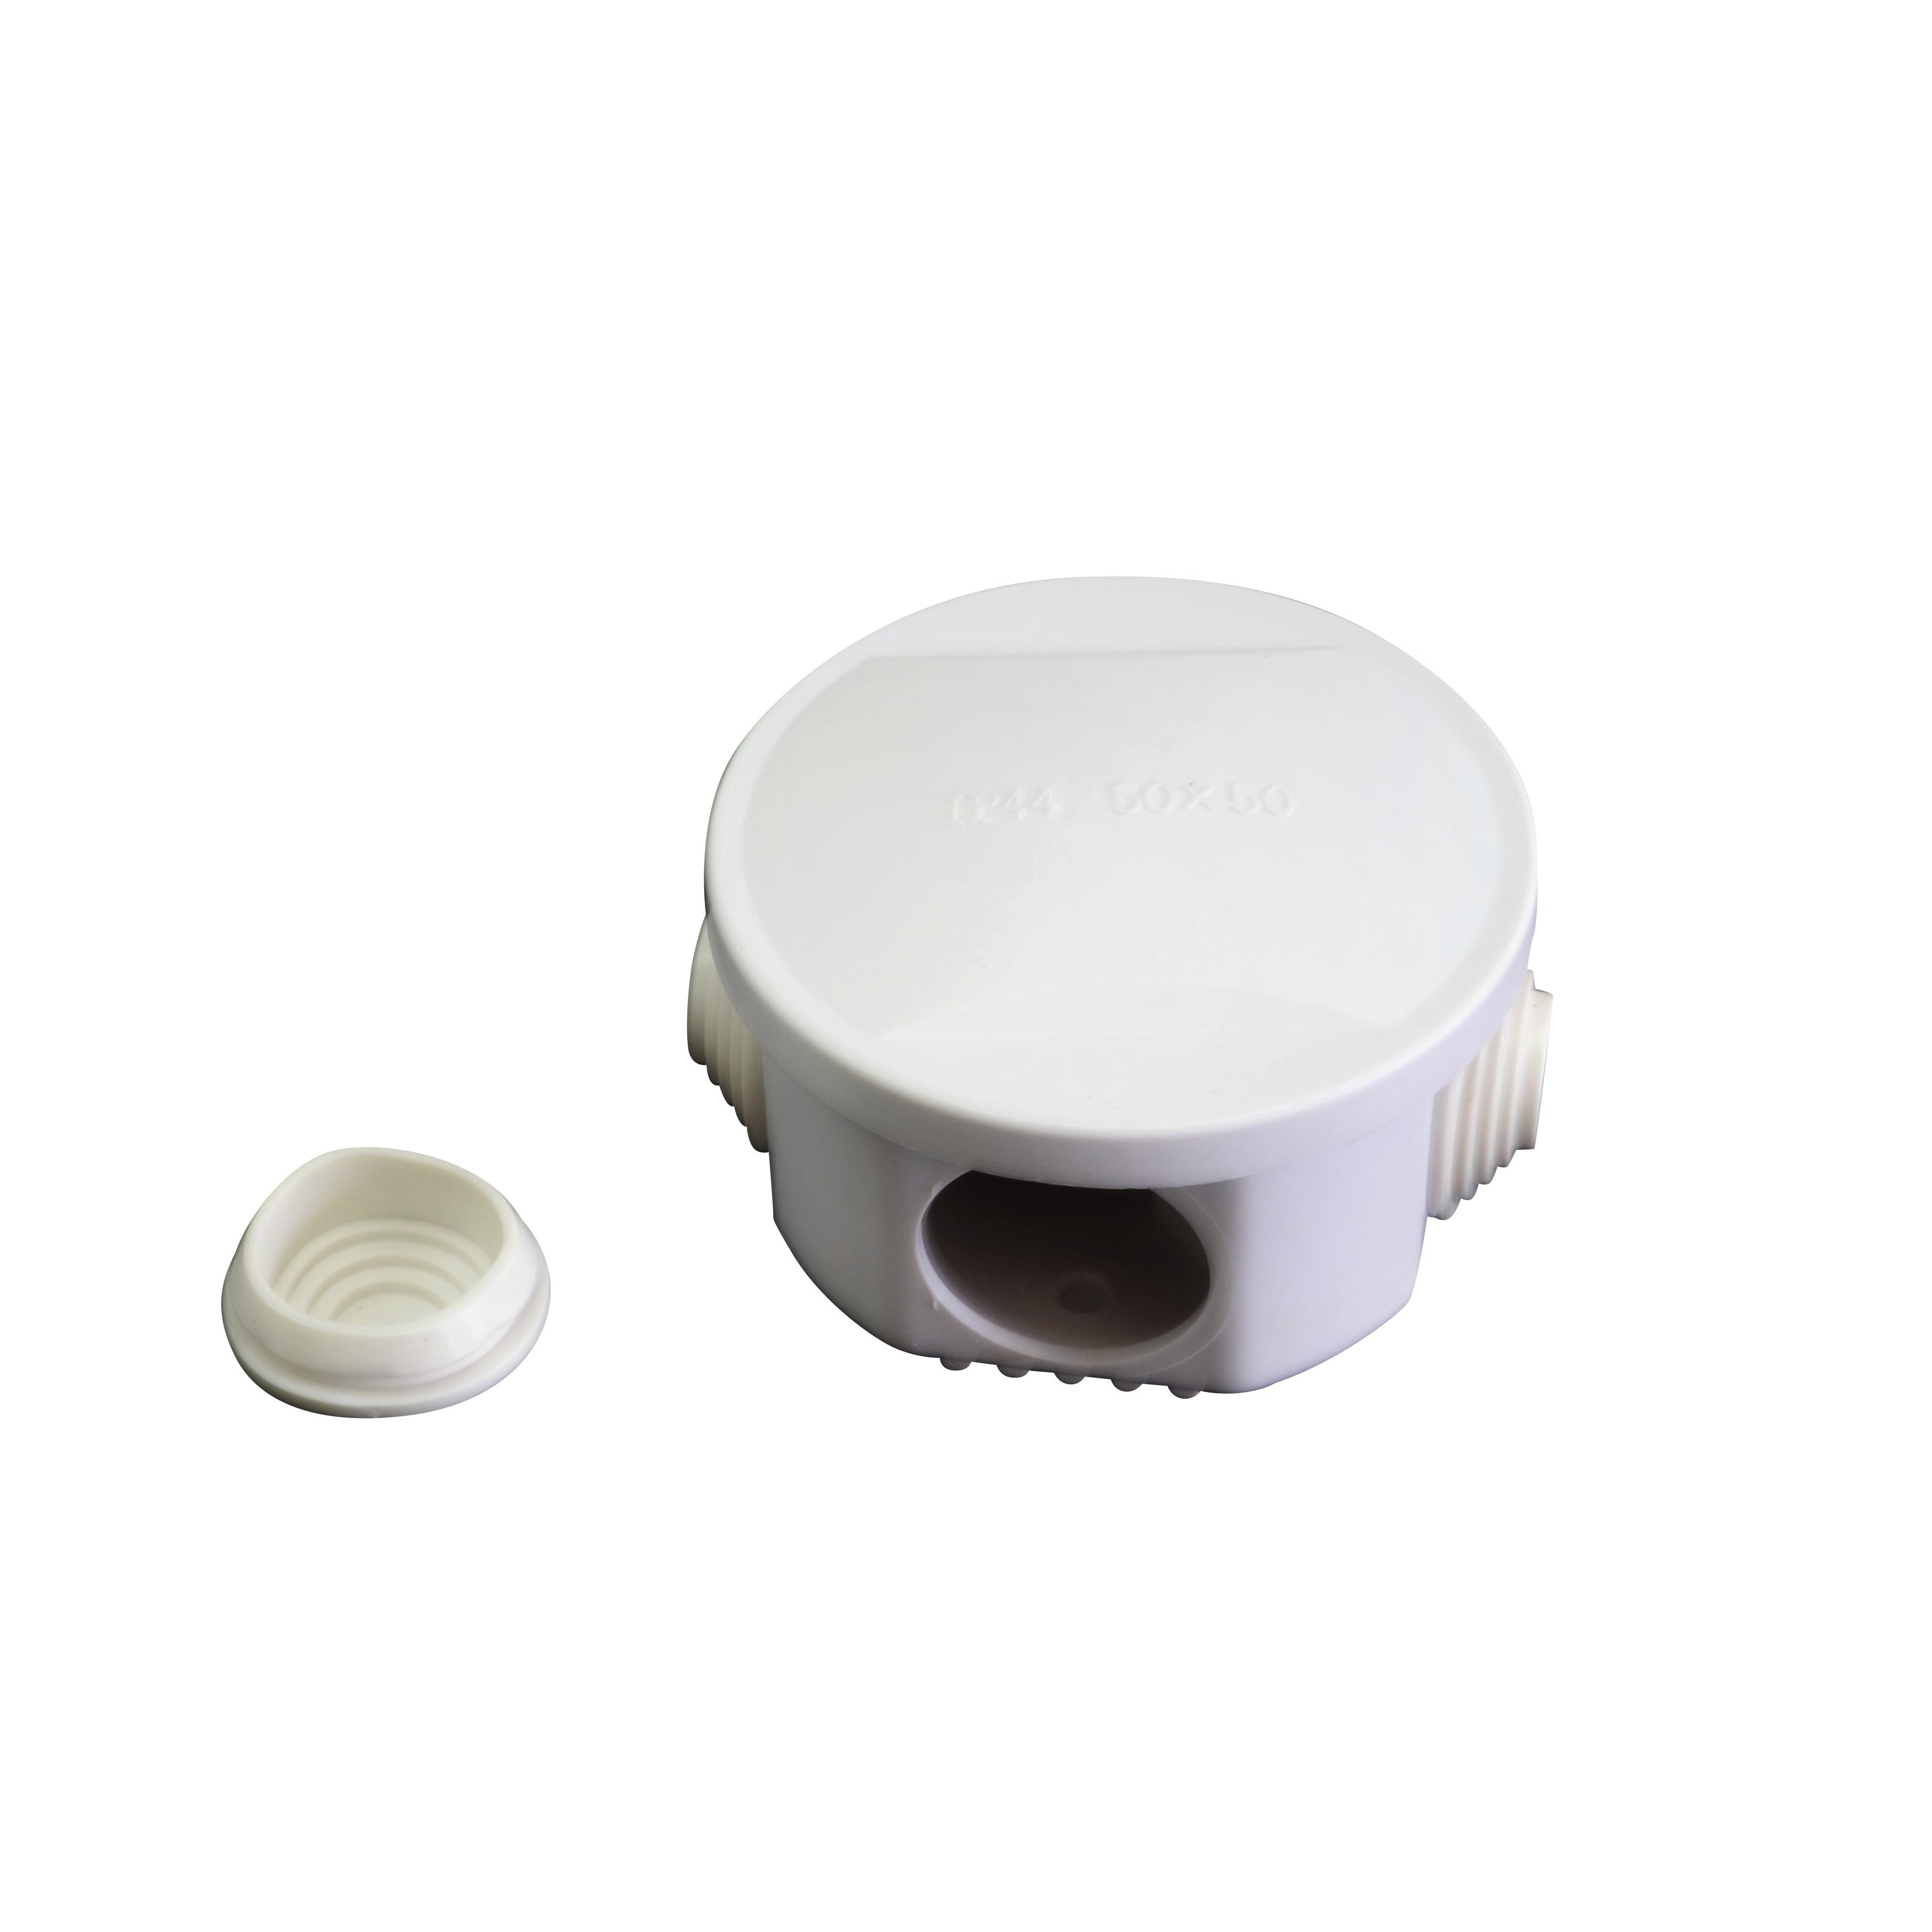 50x50 mm ABS Plastic IP44 Waterproof Junction Box